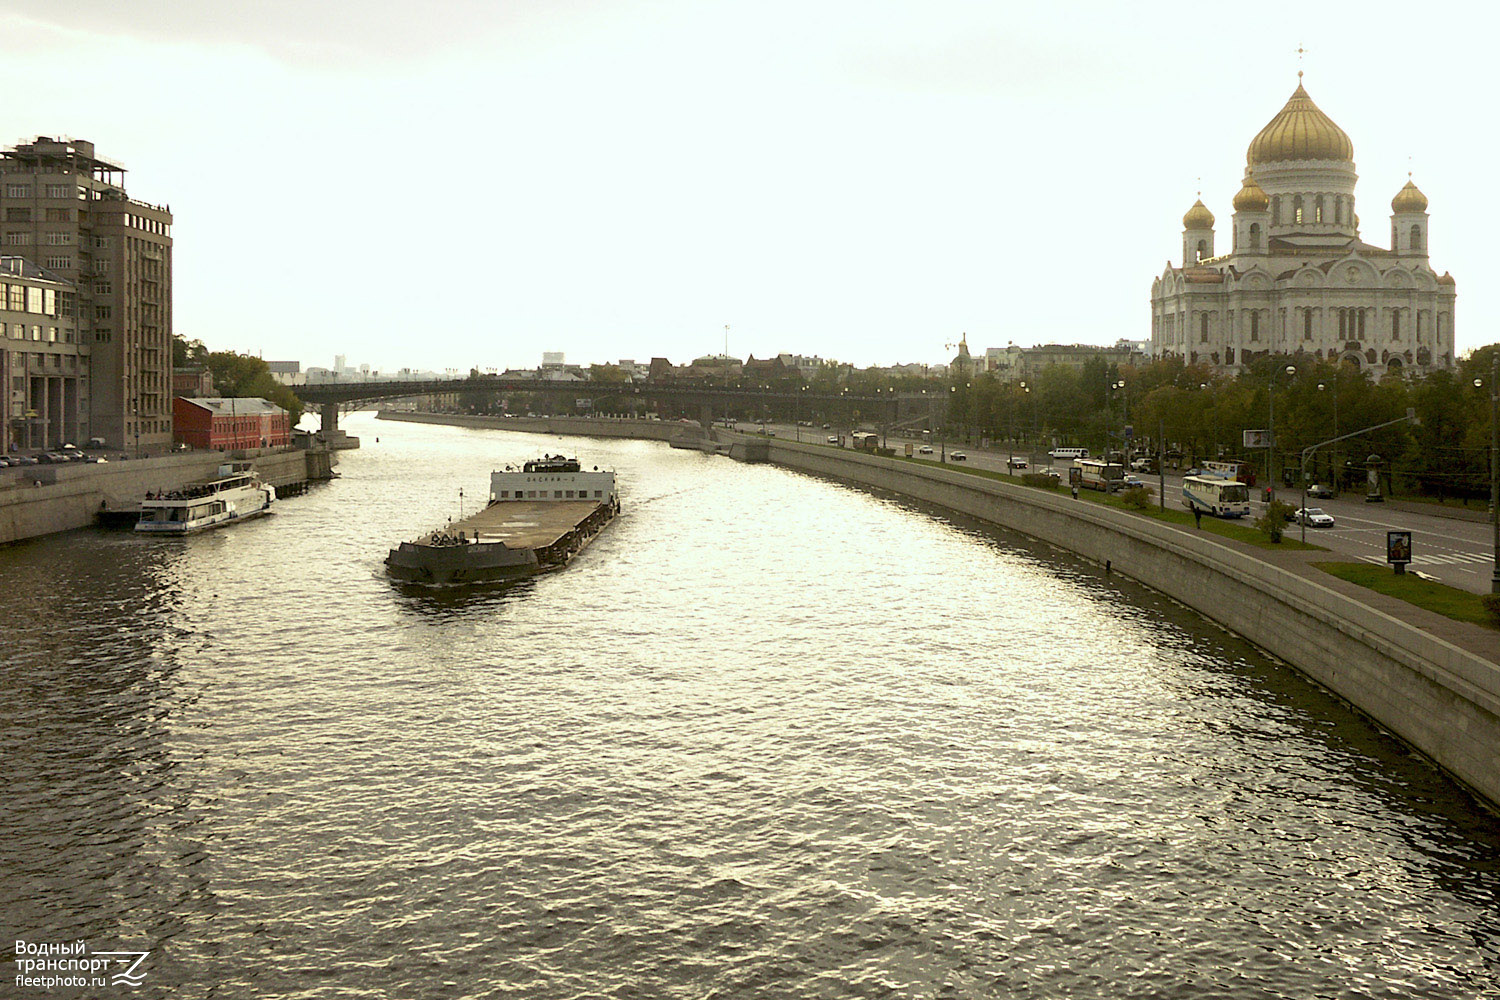 Окский-2, Неопознанное судно - тип Москва